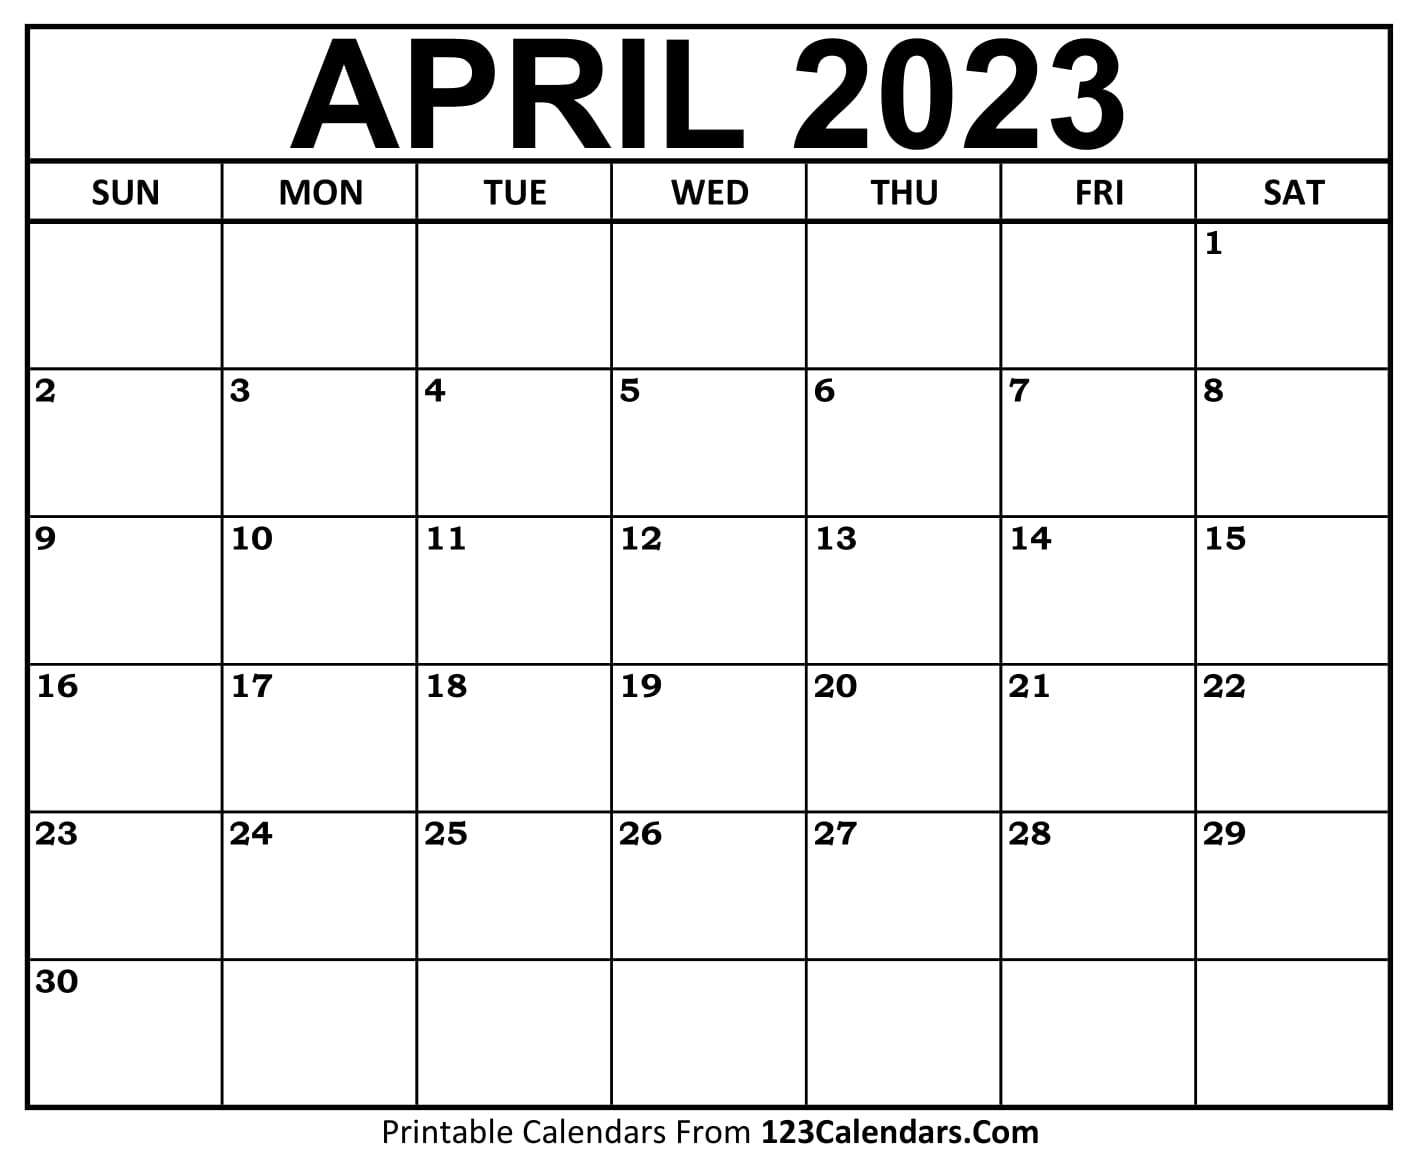 april-2023-calendars-get-calendar-2023-update